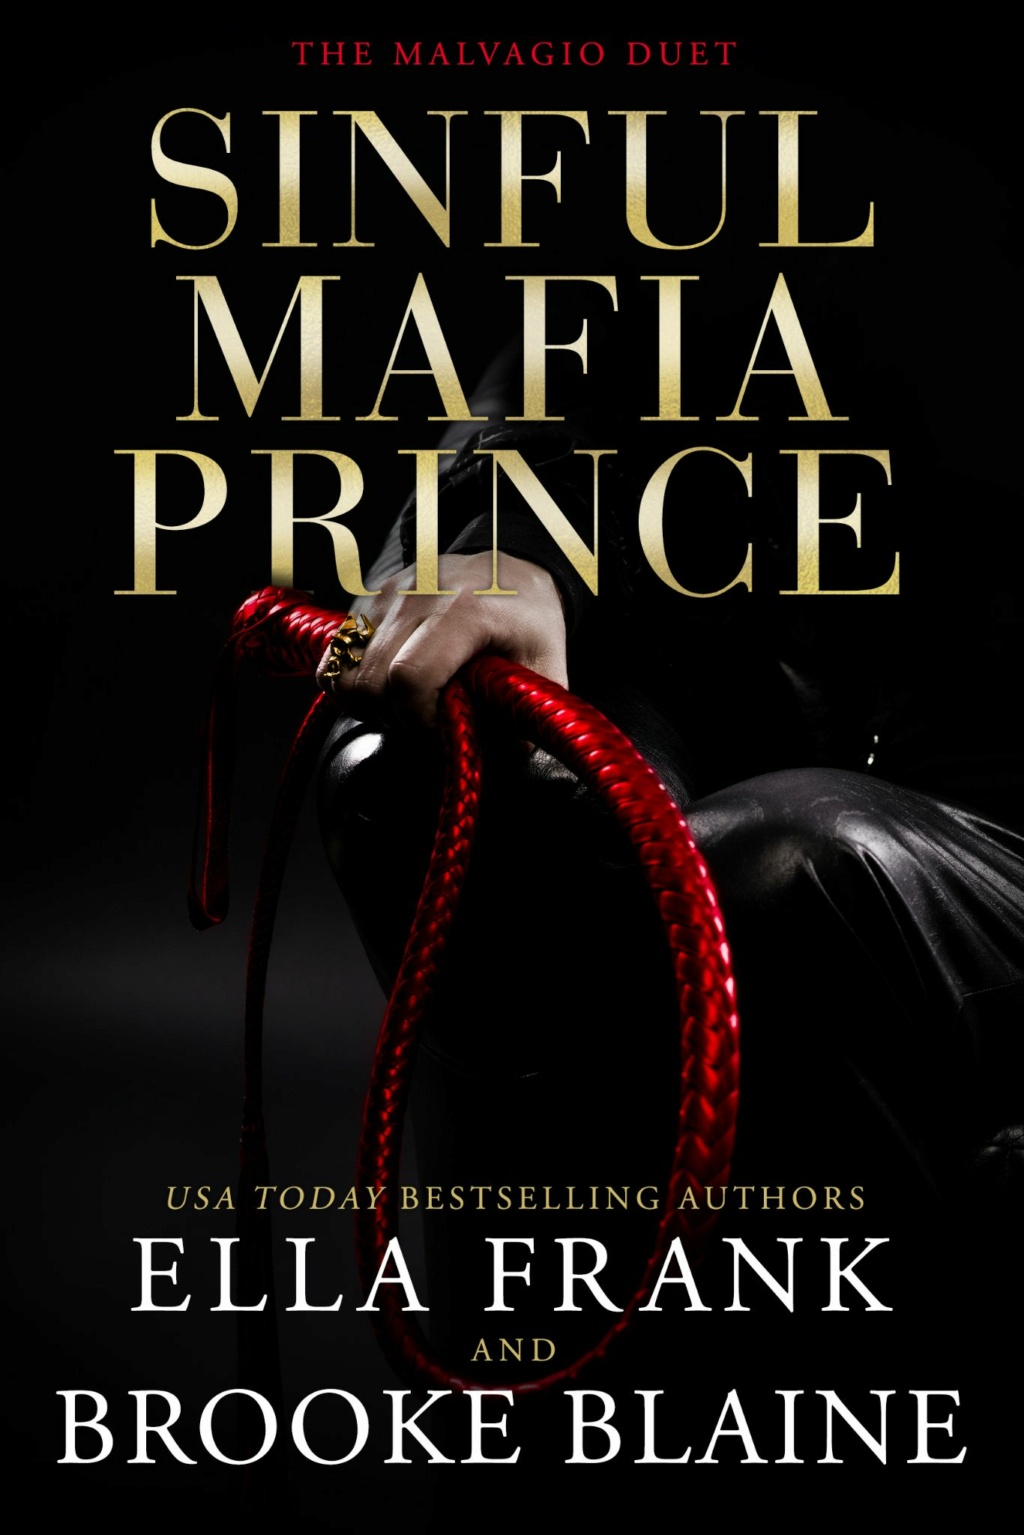 Malvagio Duet - Tome 2 : Sinful Mafia prince de Ella Frank & Brooke Blaine Sinful10